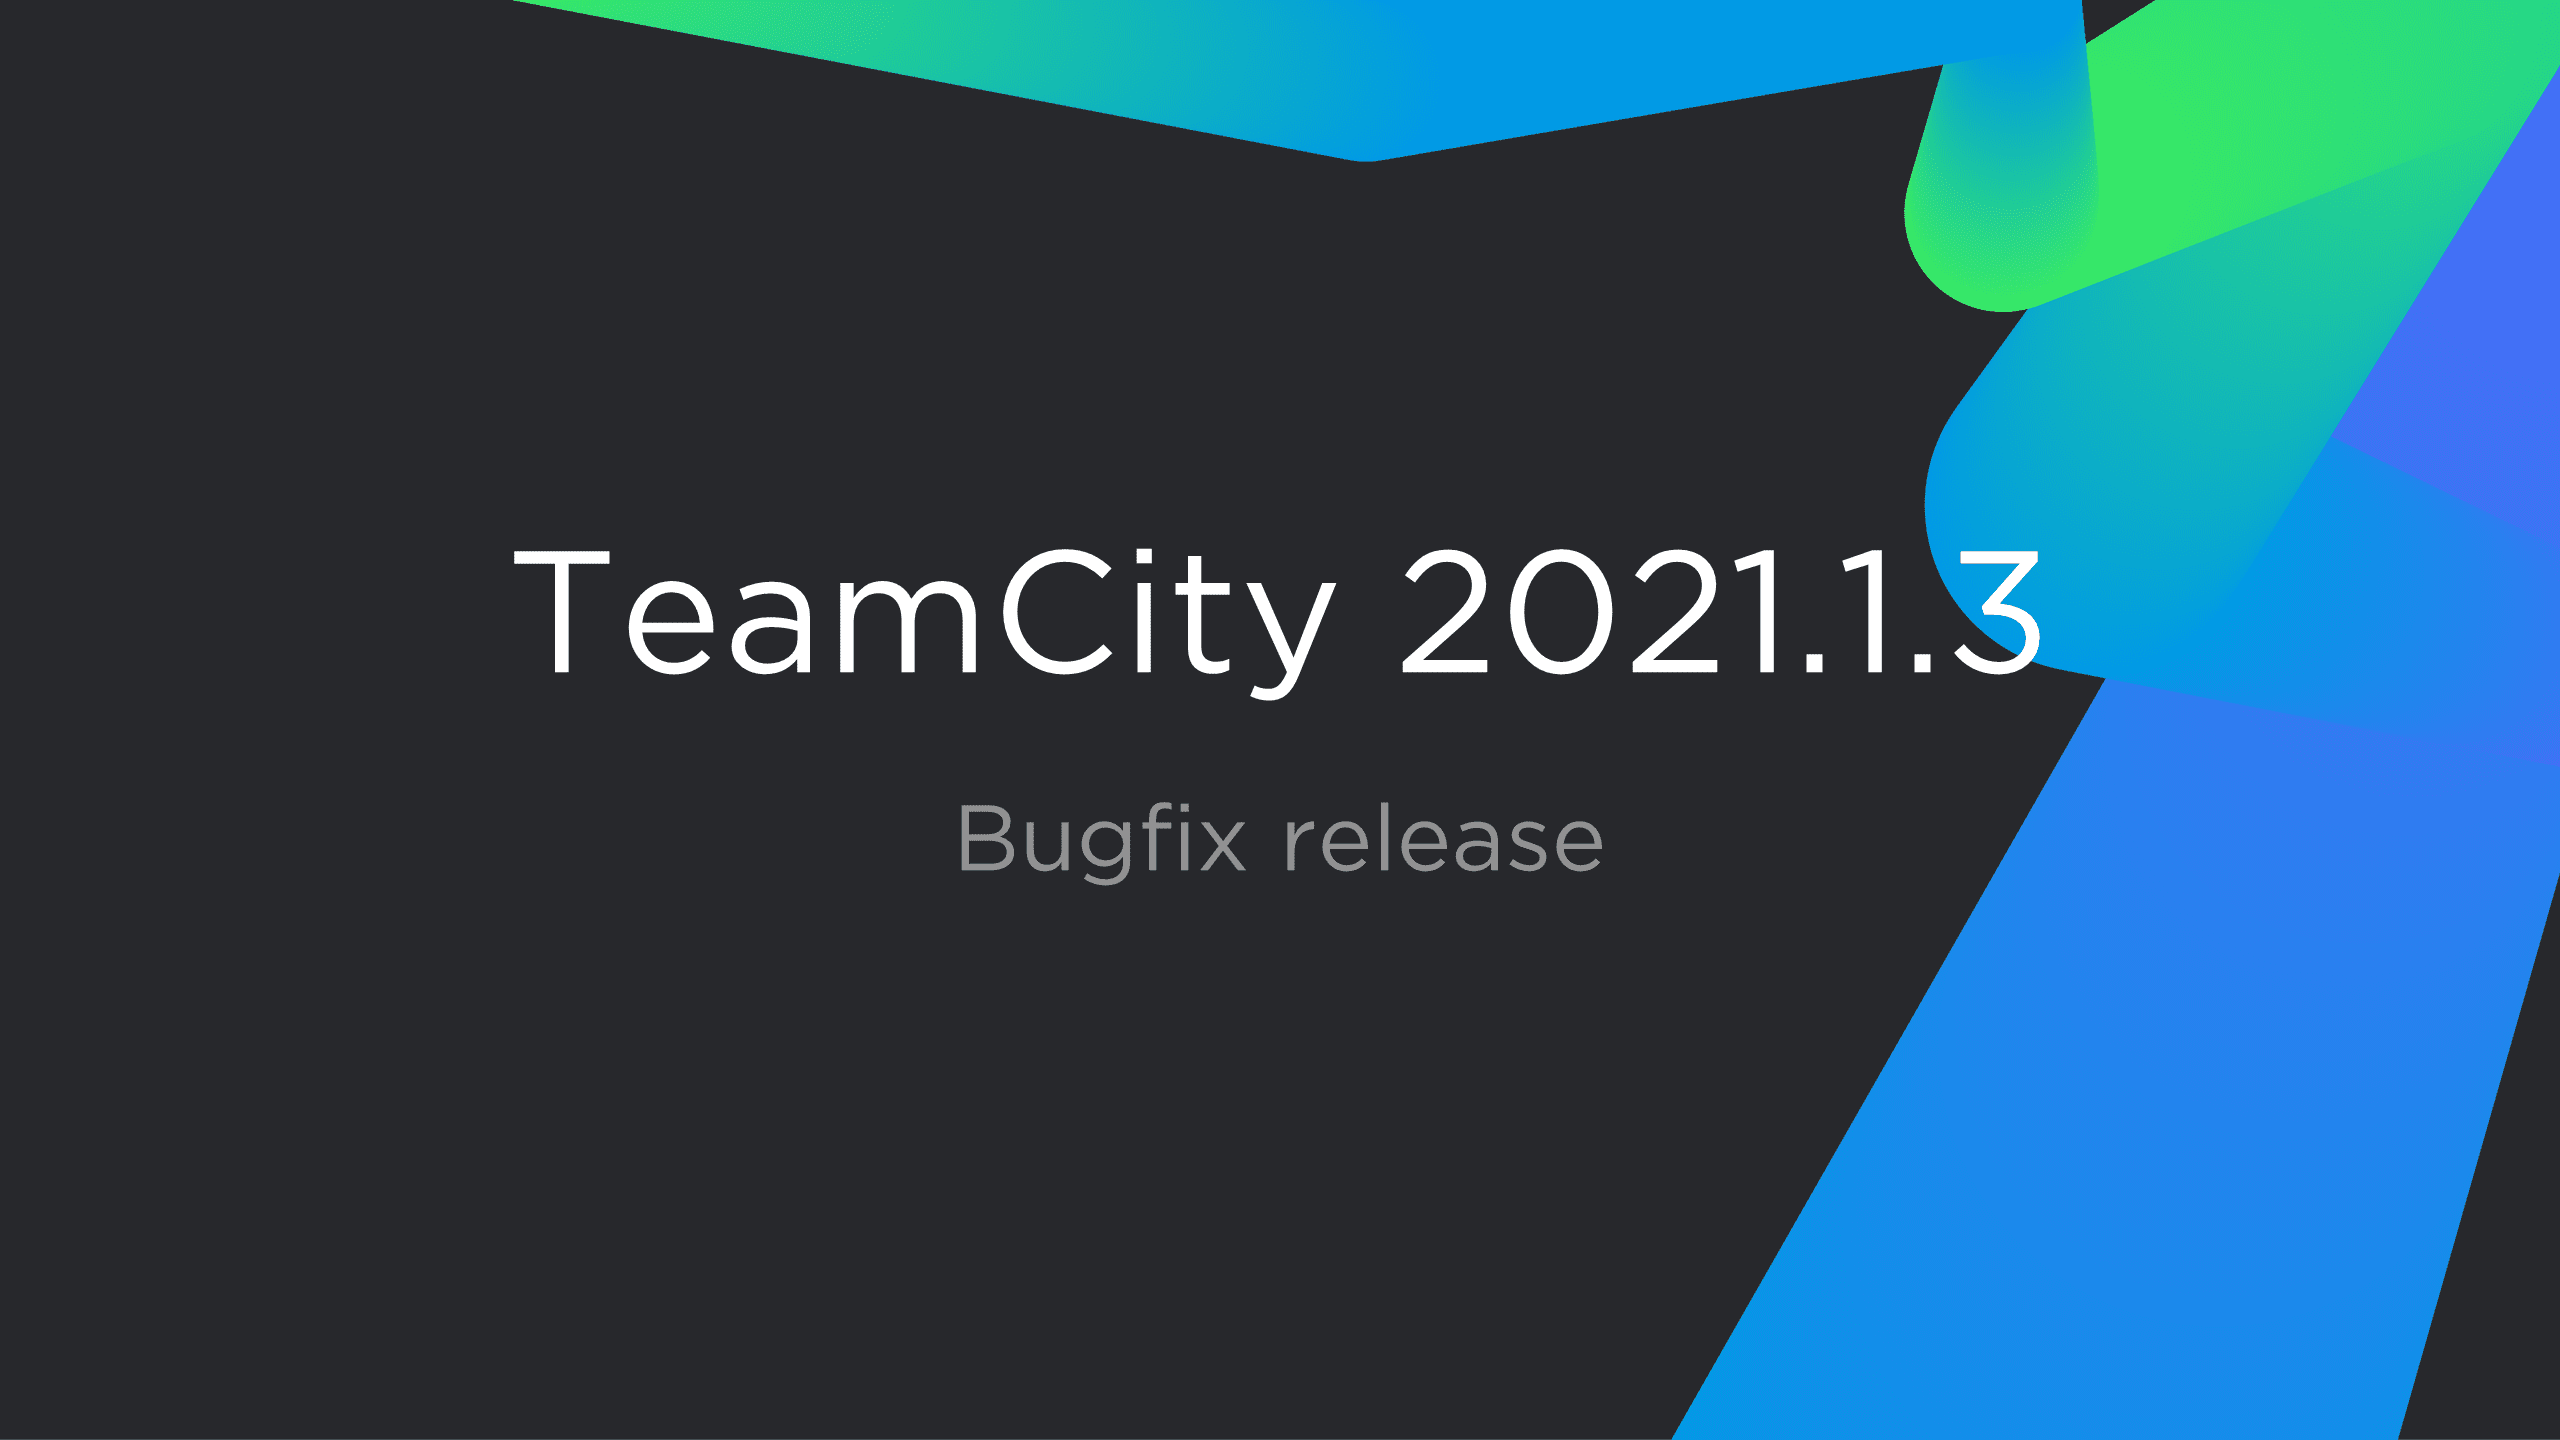 TeamCity 2021.1.3